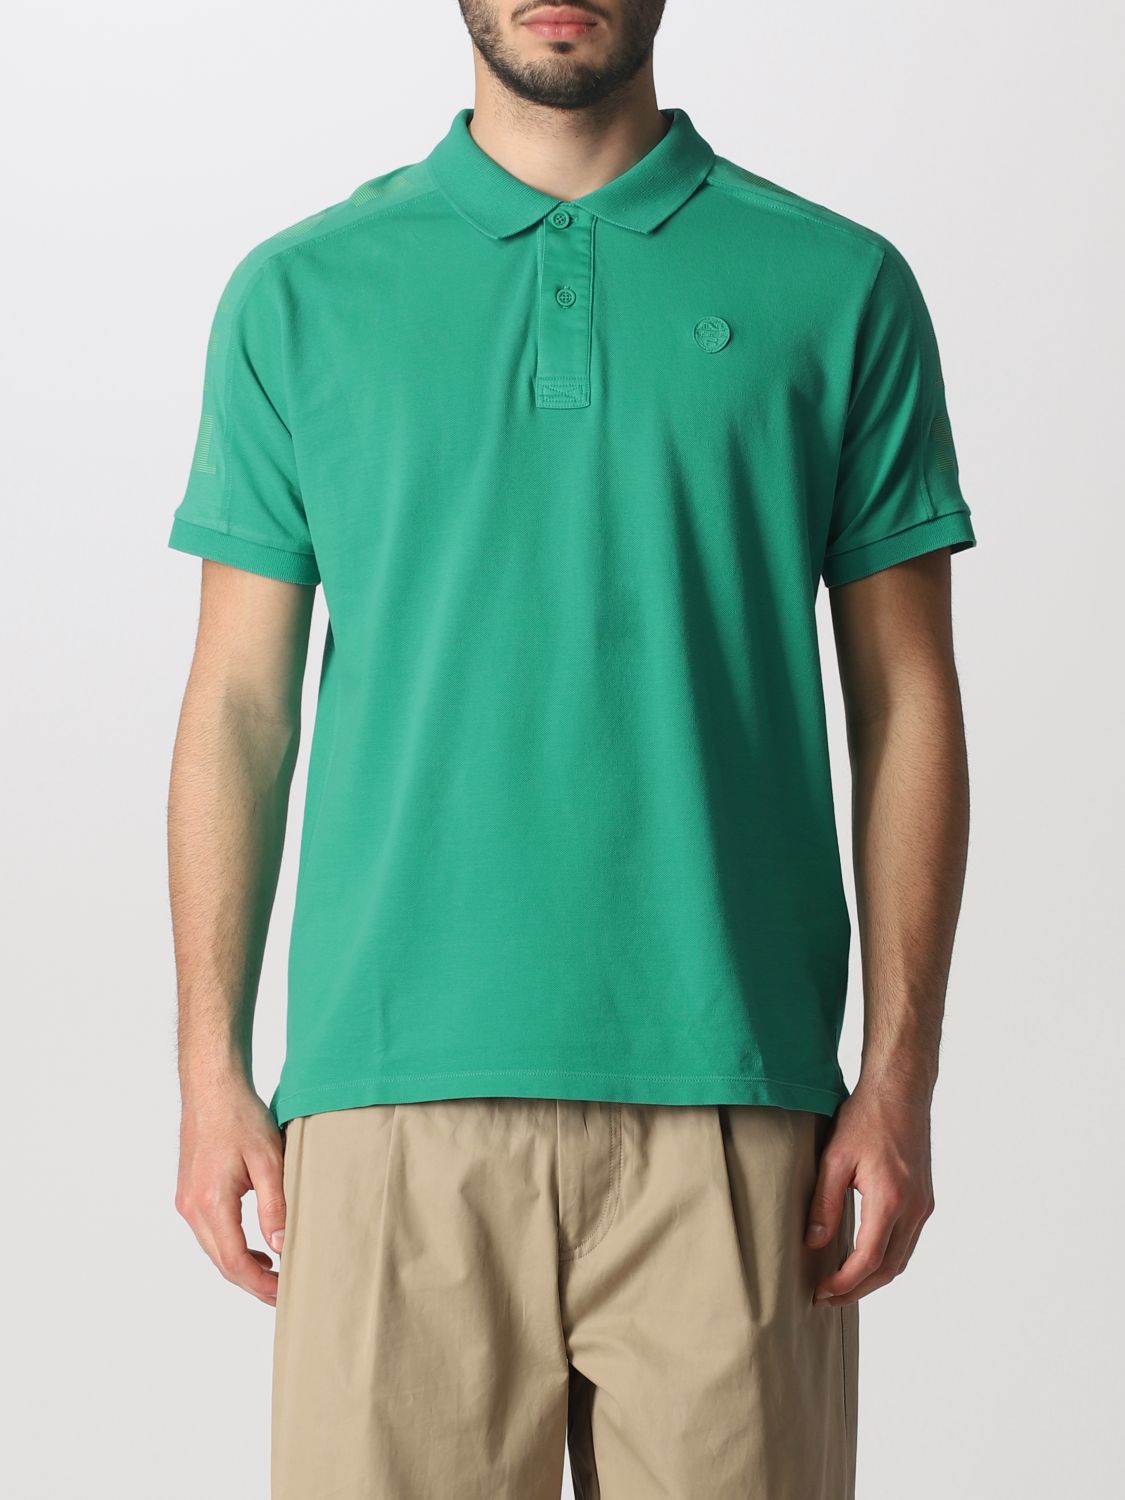 NORTH SAILS: polo shirt for man - Emerald | North Sails polo shirt ...